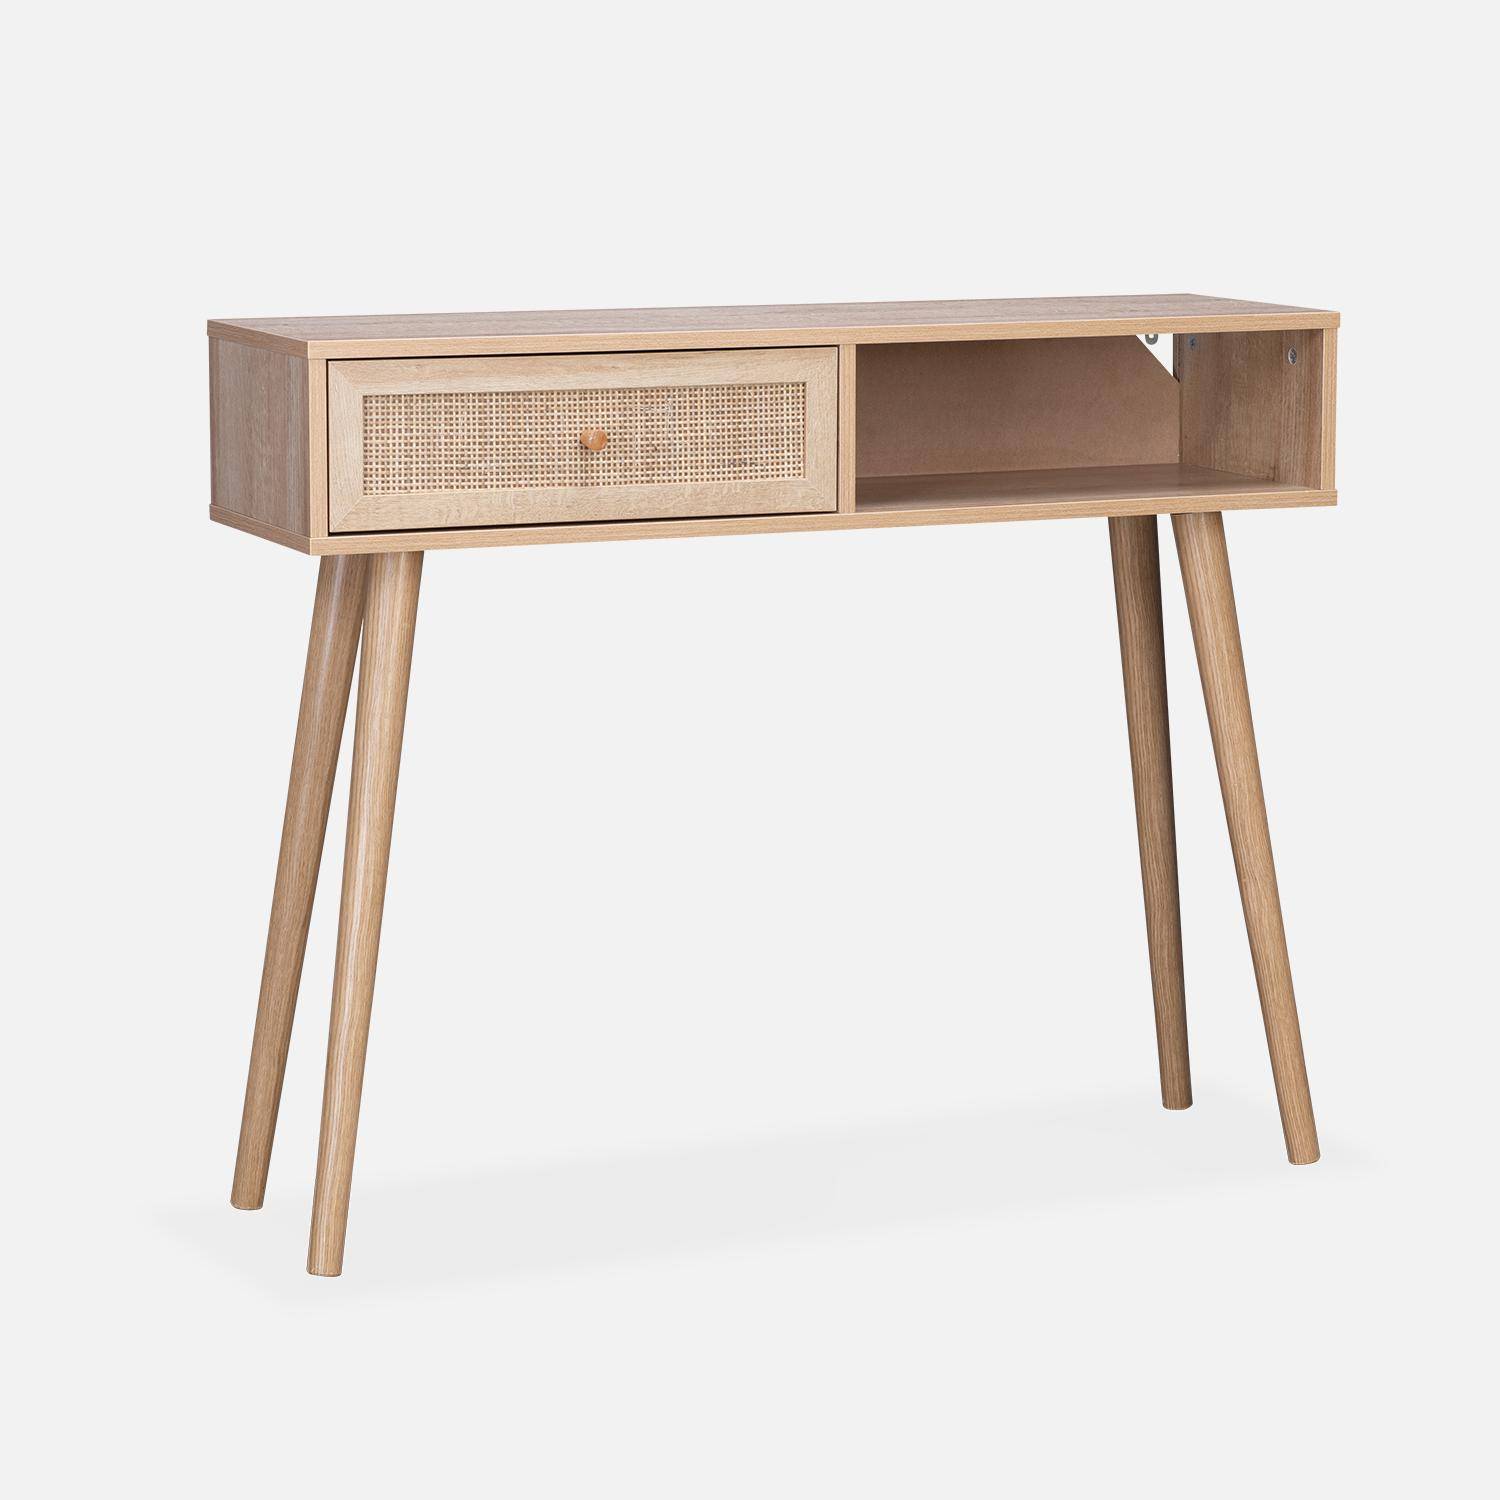 Wood and cane rattan Scandi-style console table, 100x30x81cm - Boheme - Natural wood colour Photo2